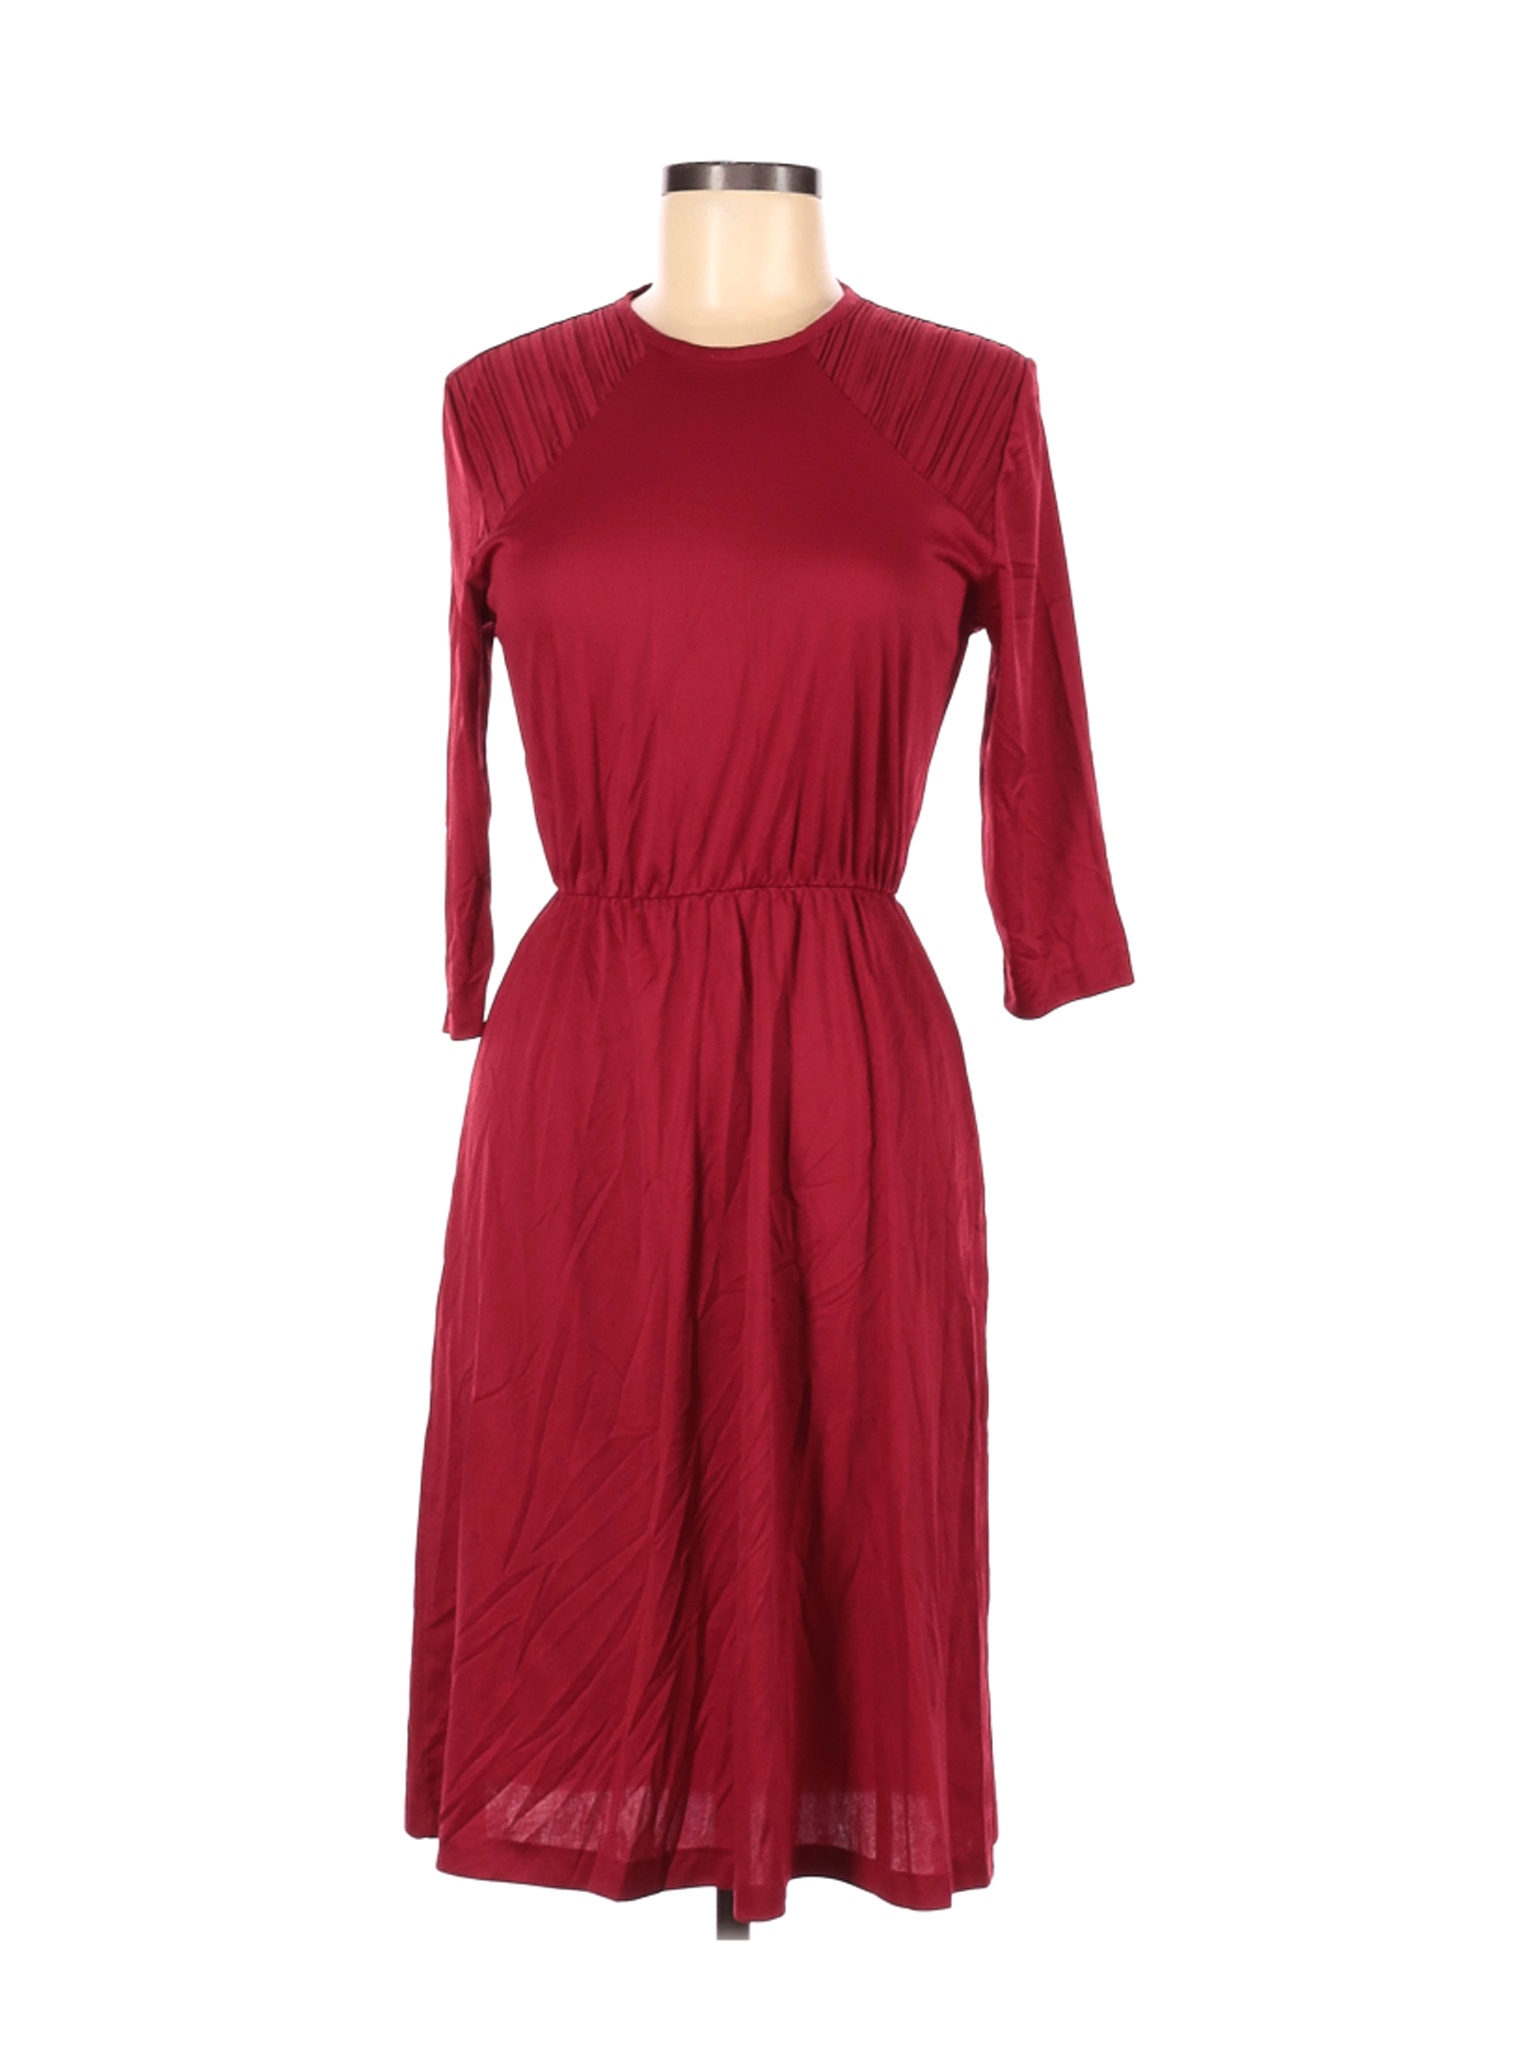 Blair Women Red Casual Dress 6 Petites | eBay